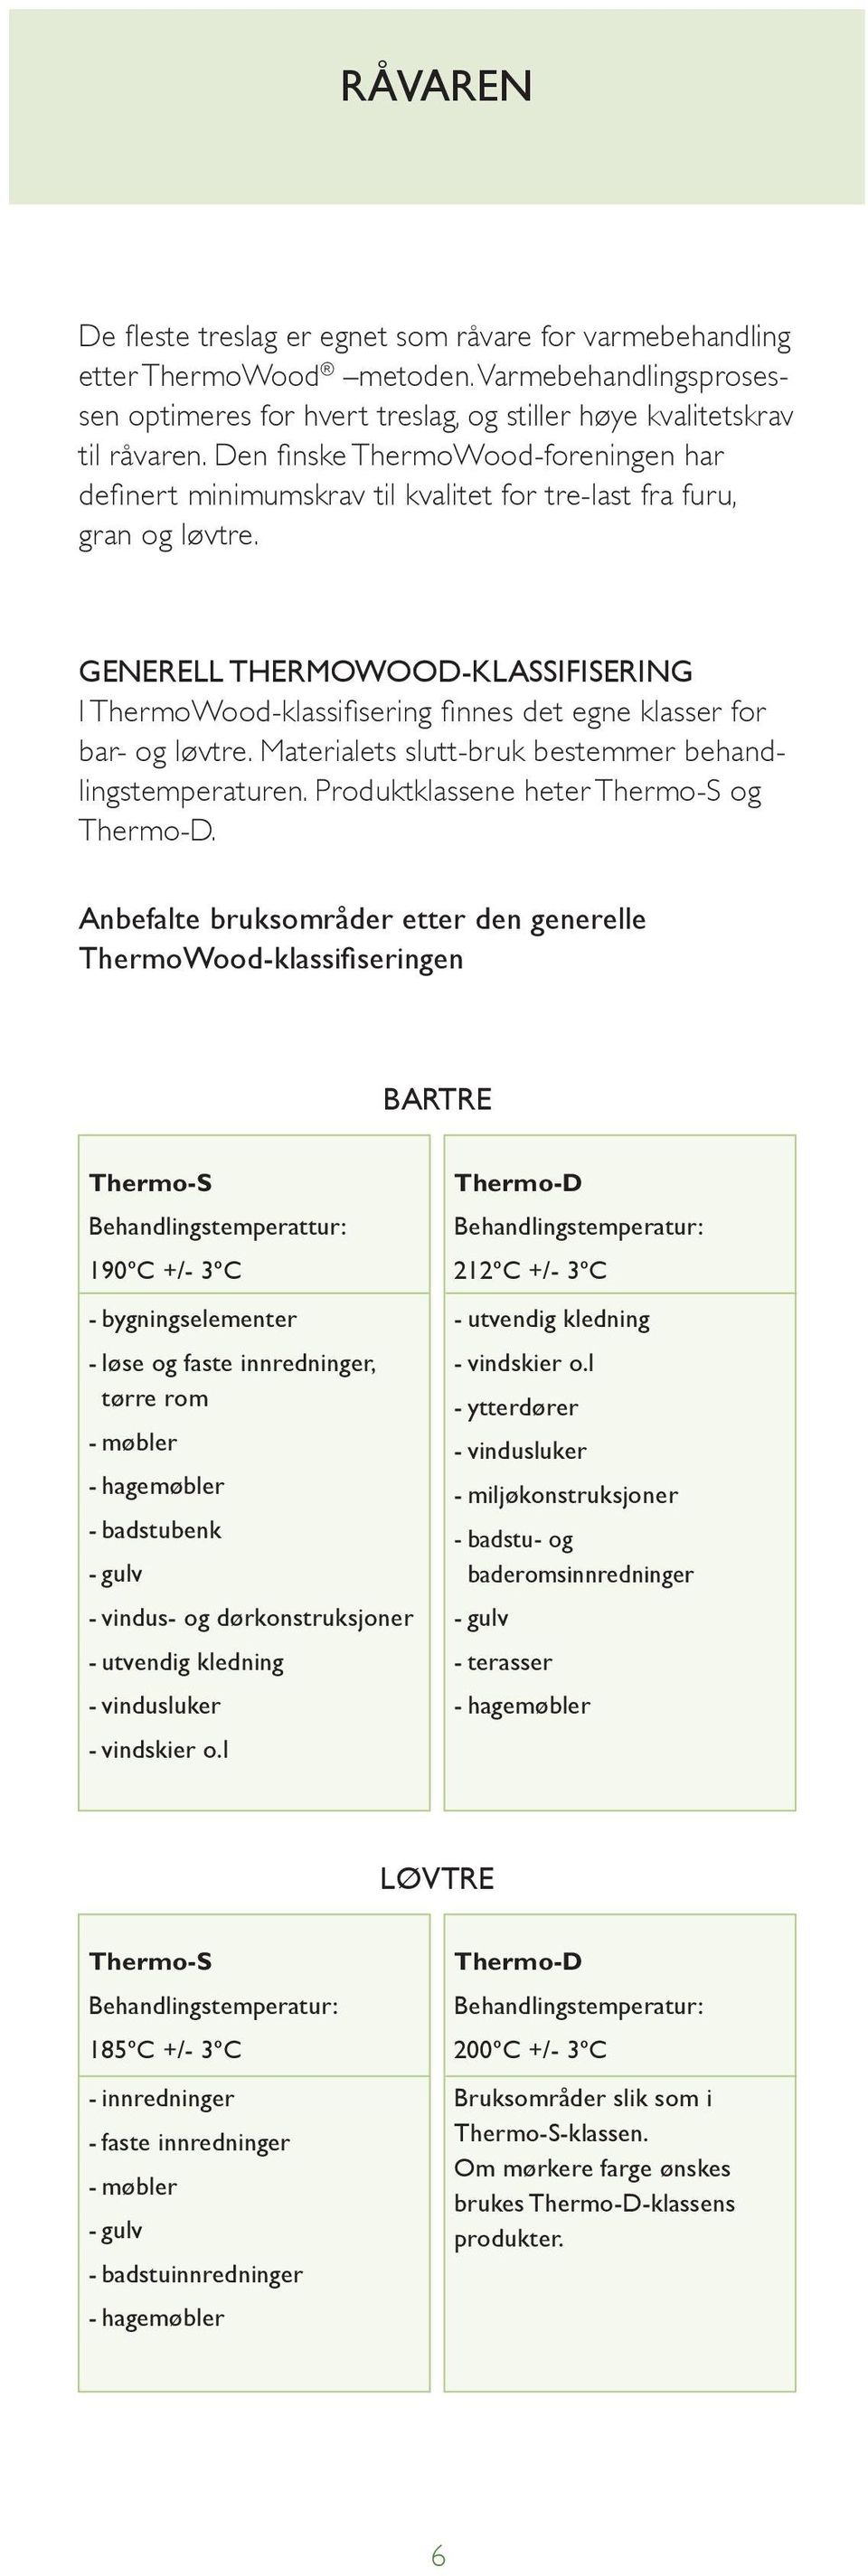 Generell ThermoWood-klassifisering I ThermoWood-klassifisering finnes det egne klasser for bar- og løvtre. Materialets slutt-bruk bestemmer behandlingstemperaturen.